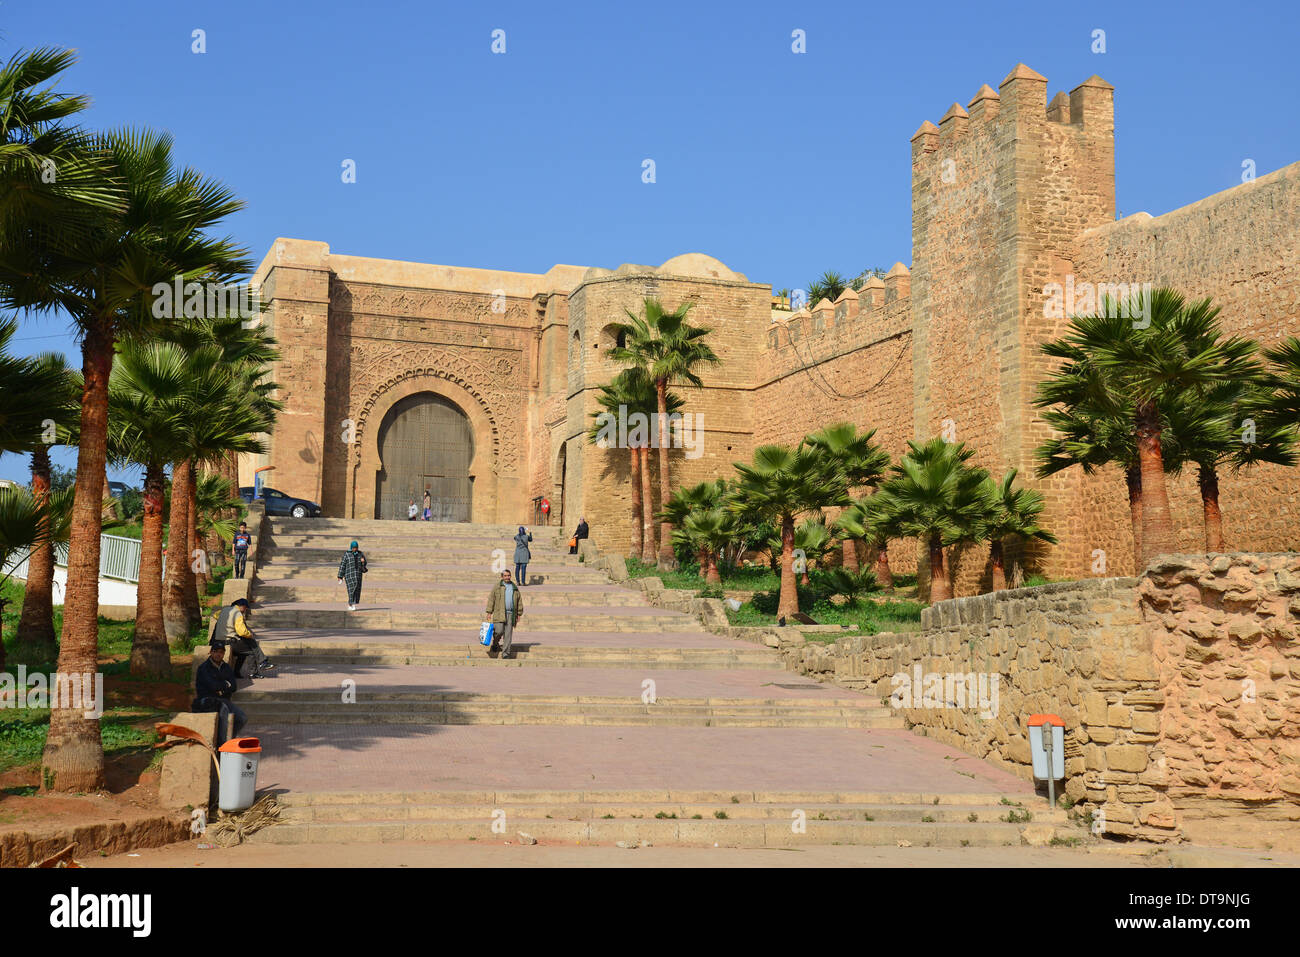 Cancello principale della Kasbah di Udayas (Qasbah des Oudaya), Rabat, Rabat-Salé-Zemmour-Zaer regione, il Regno del Marocco Foto Stock